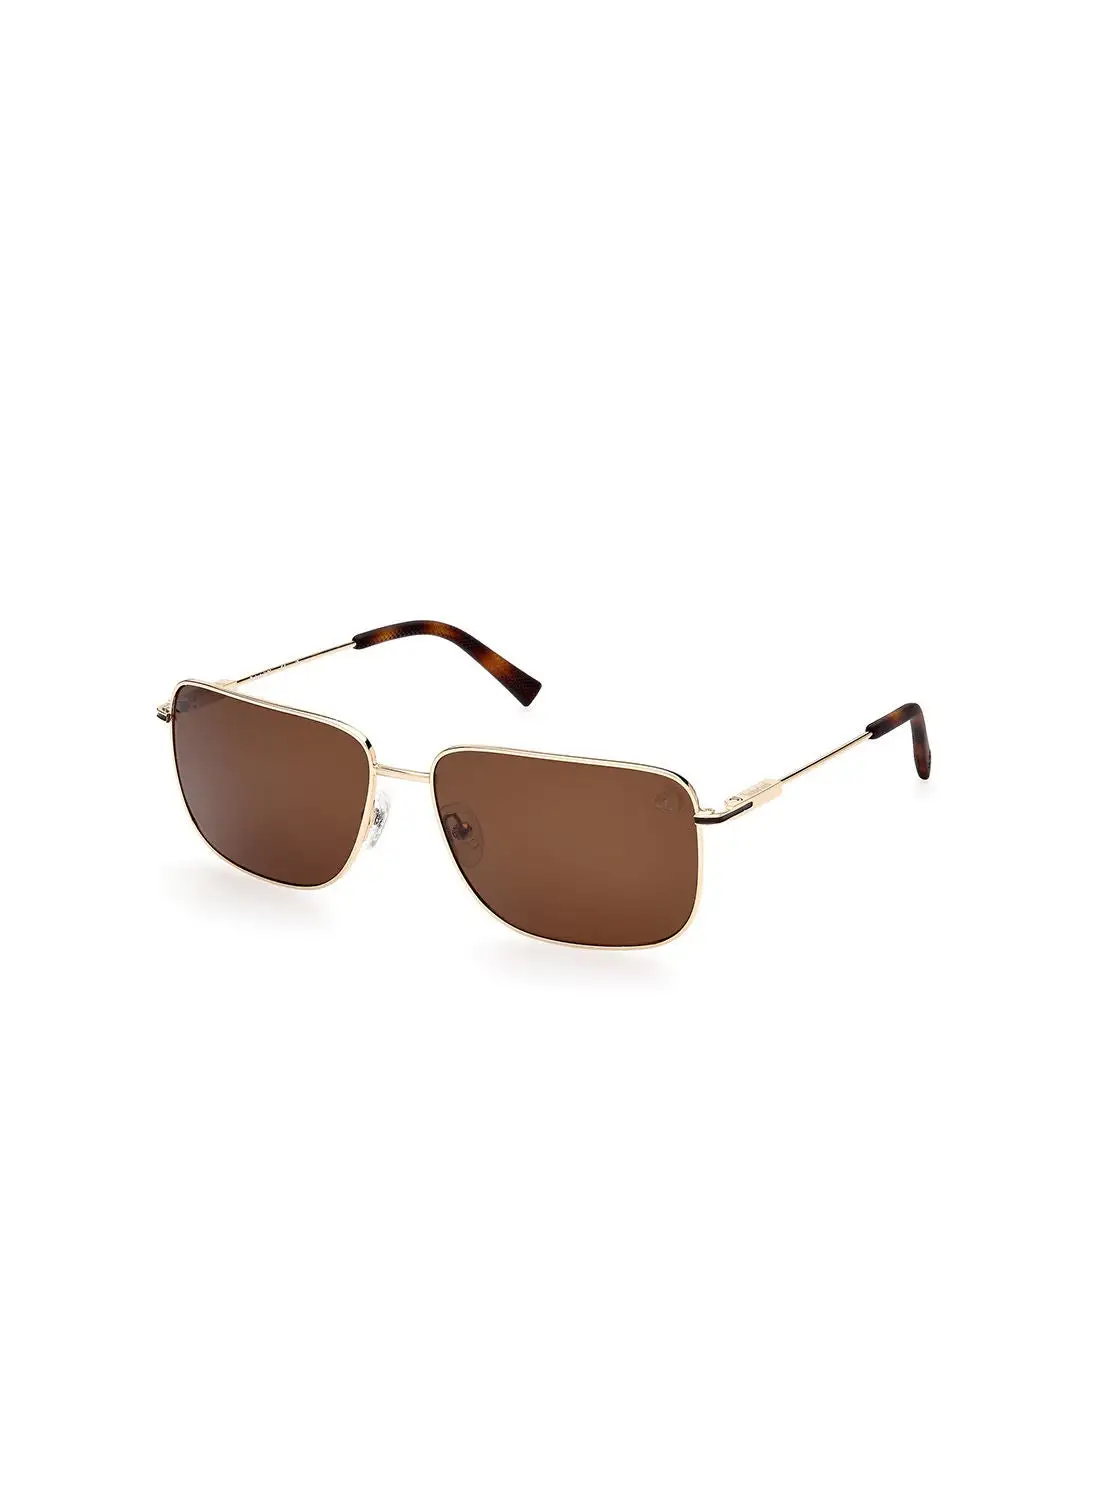 Timberland Men's Polarized Rectangular Sunglasses - TB929032H62 - Lens Size: 62 Mm